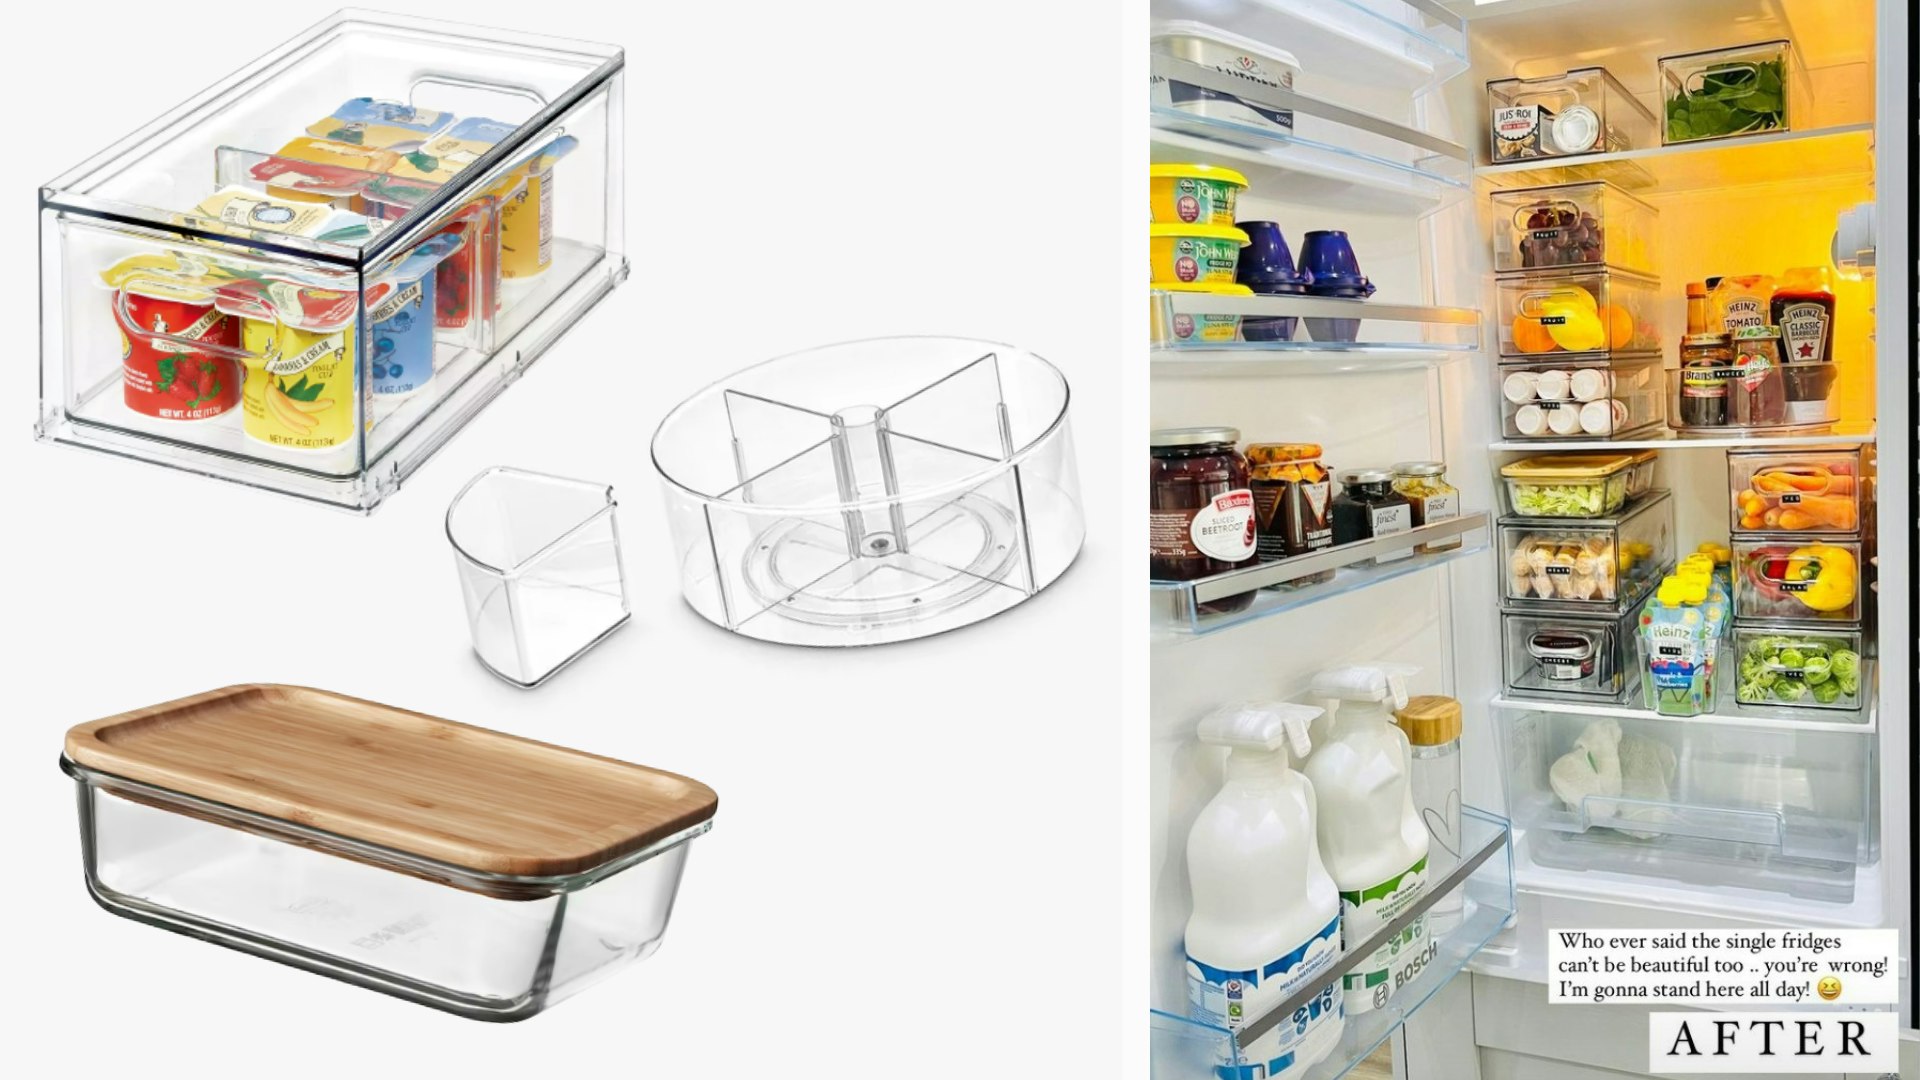 Mrs Hinch inspired fridge storage ideas to keep your fridge fresh and tidy